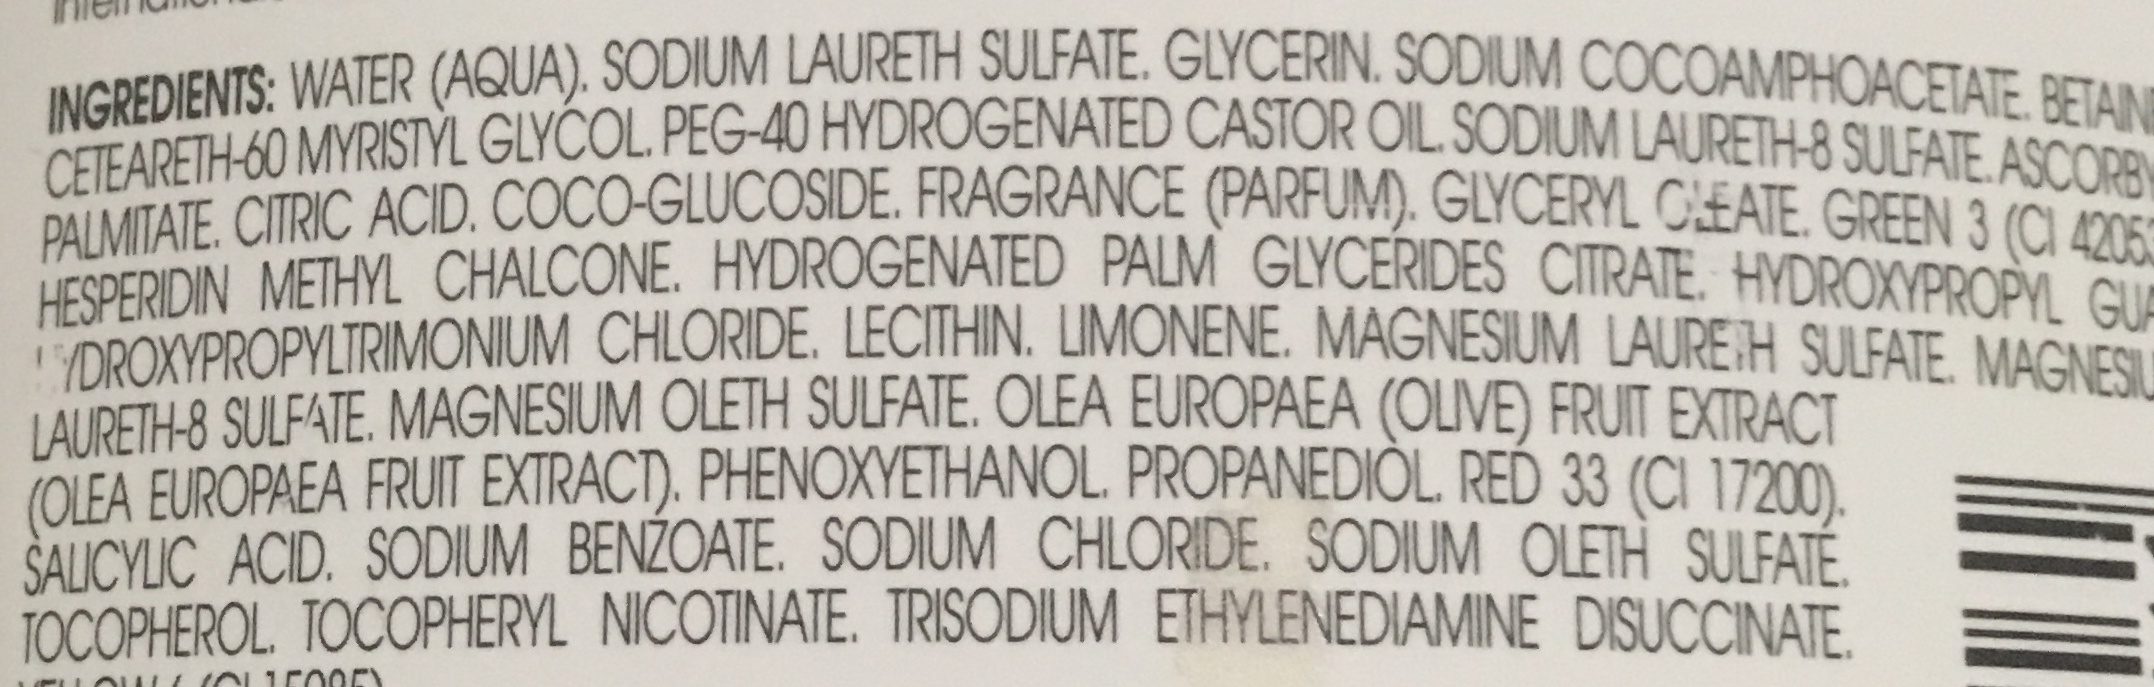 Klorane Shampooing à L'extrait Essentiel D'olivier - Ingredients - fr